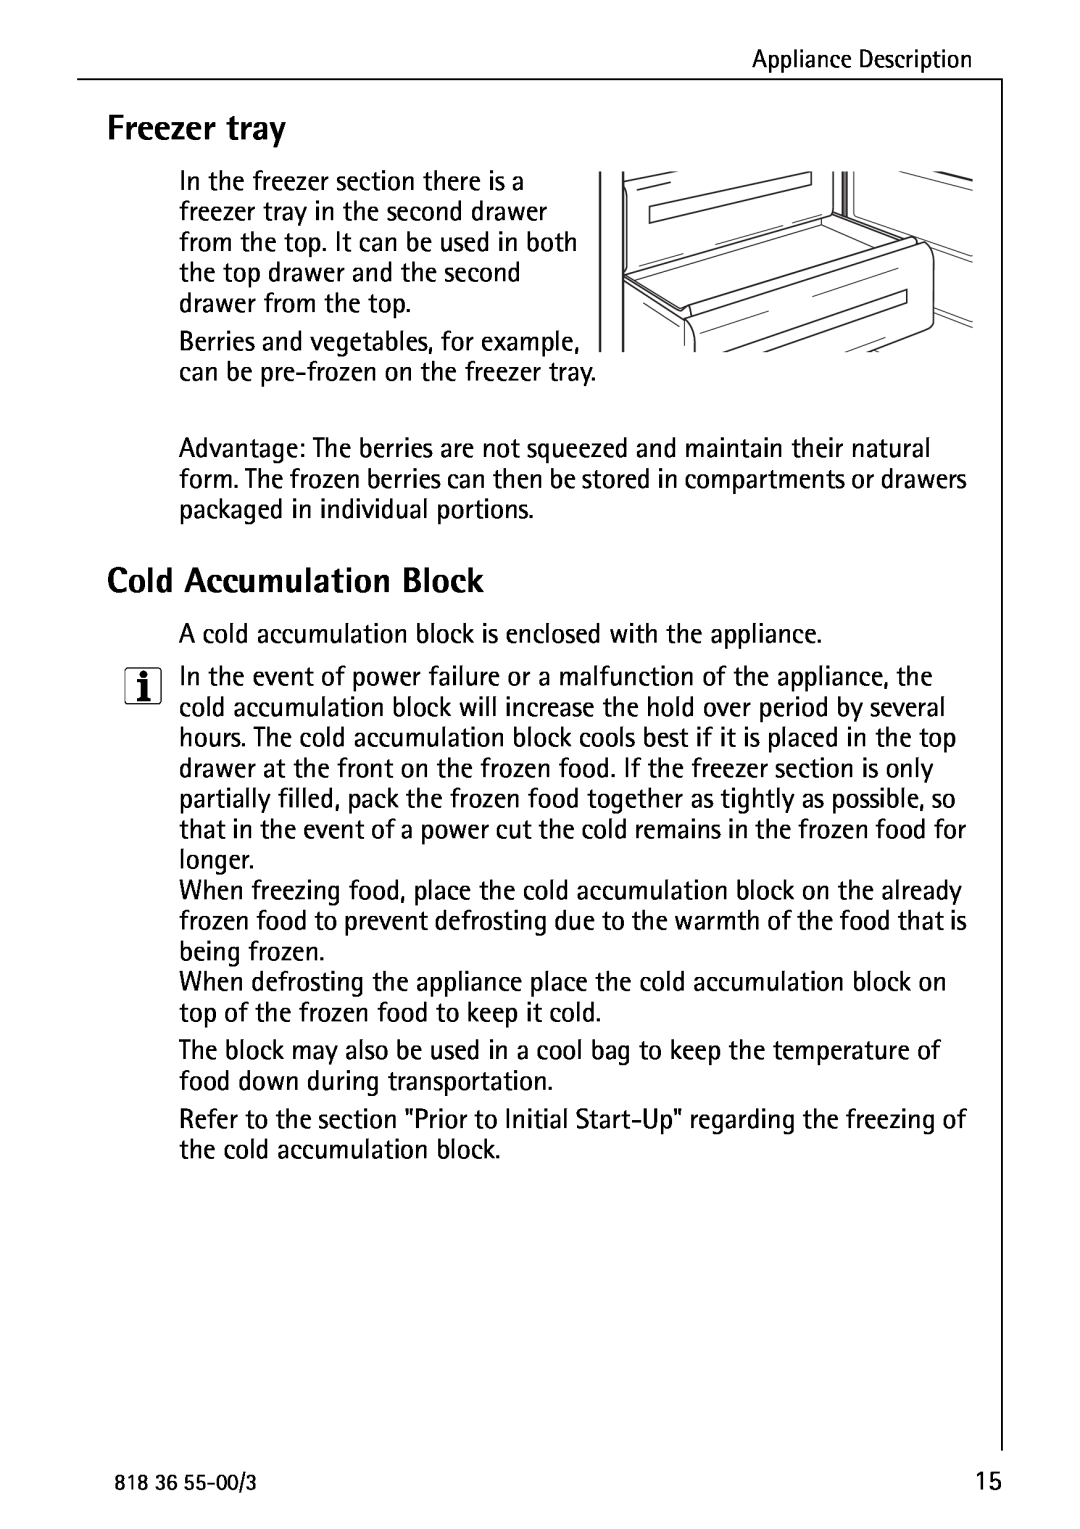 AEG 86378-KG operating instructions Freezer tray, Cold Accumulation Block 